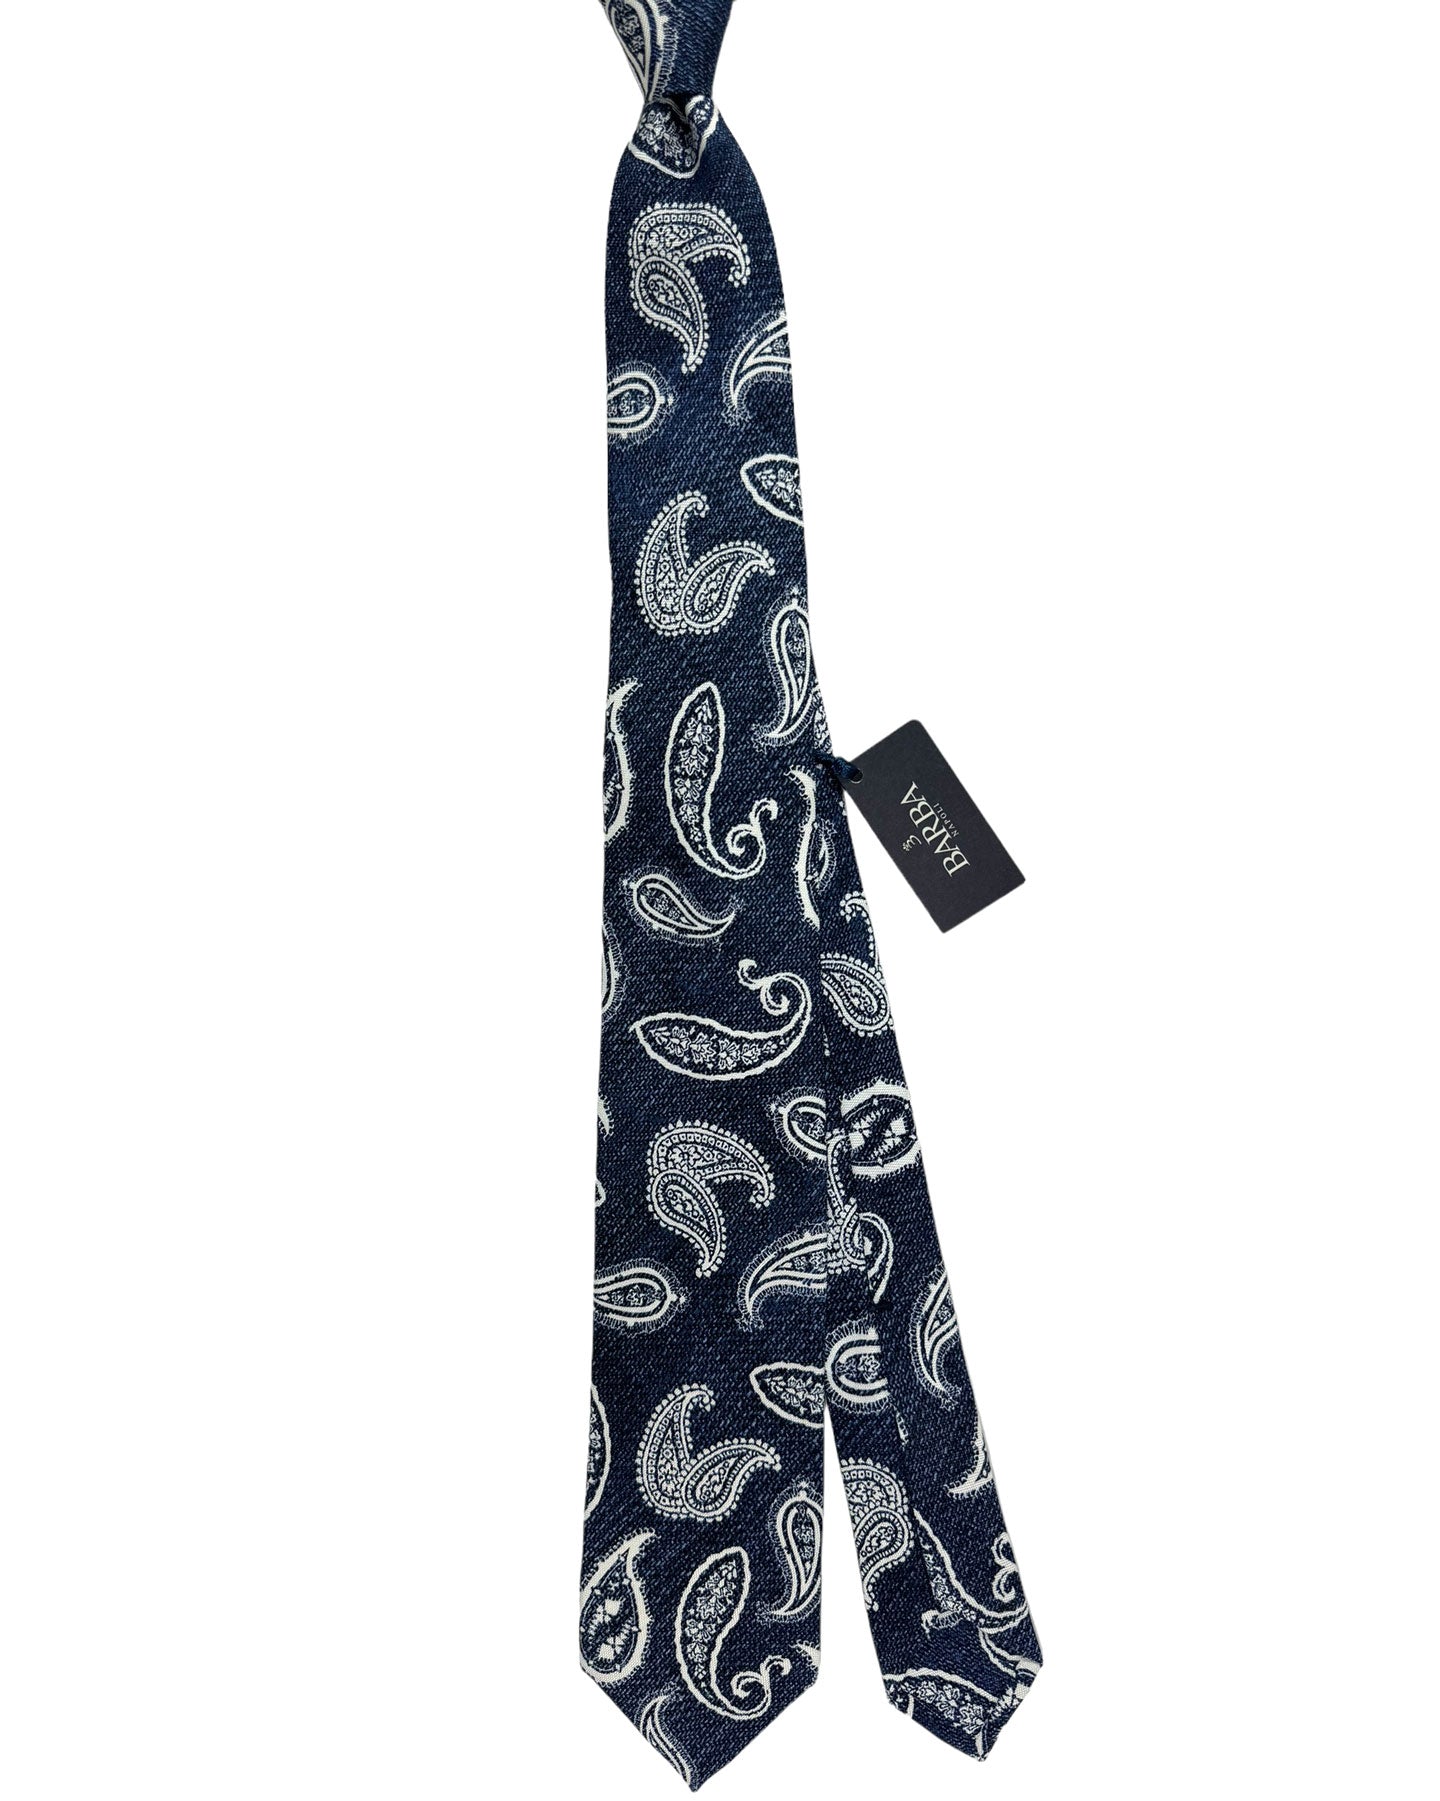 Barba Sevenfold Tie Dark Blue White Paisley Design - Sartorial Neckwear